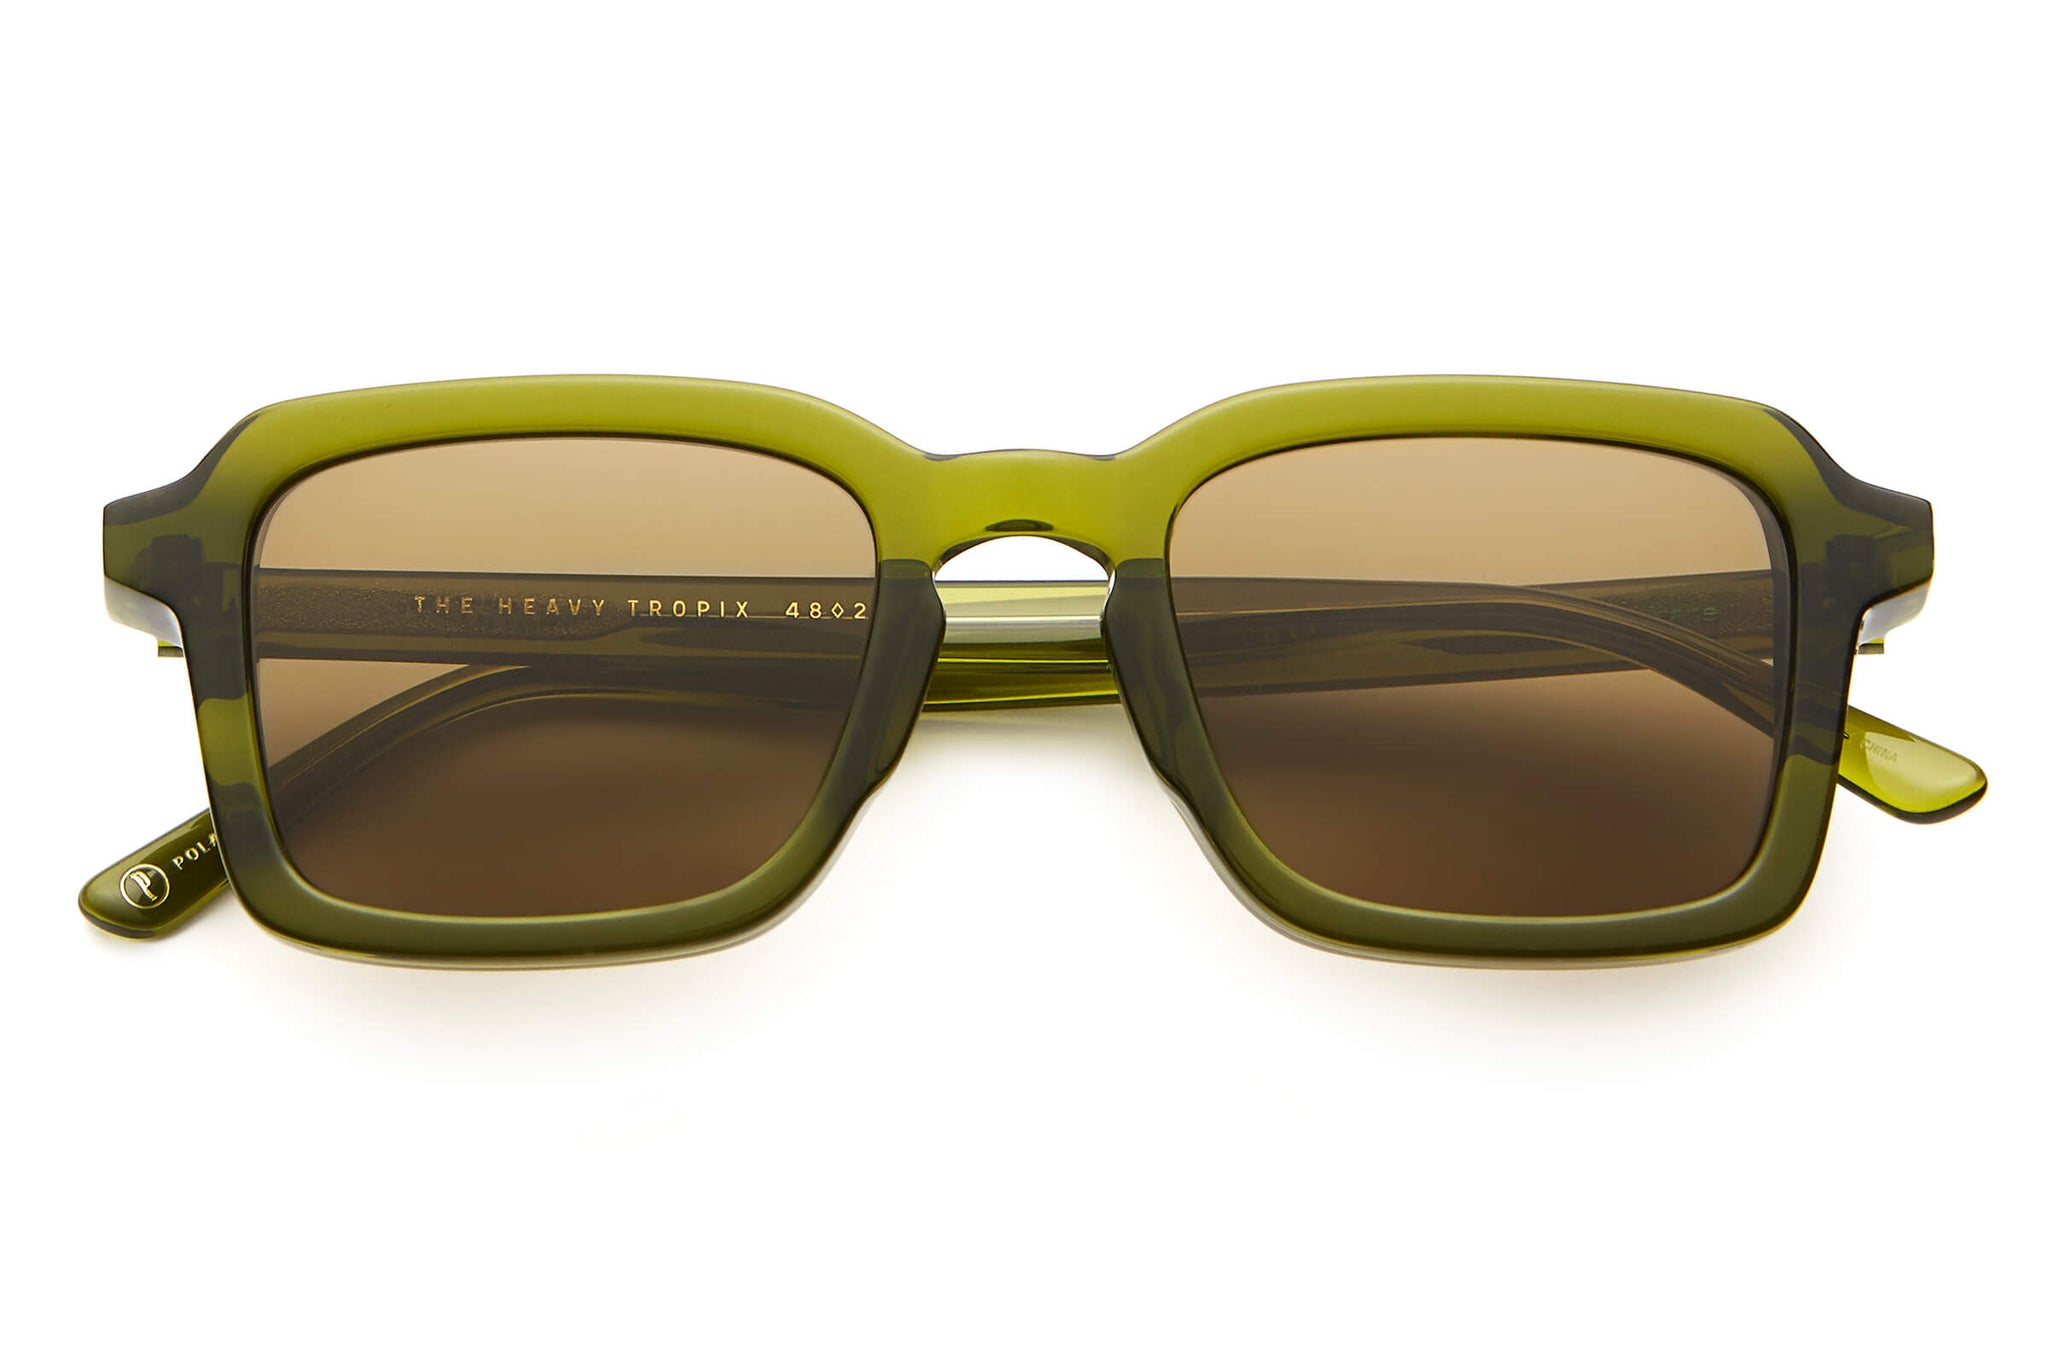 Hd Vision Aviators Sunglasses, Bronze (Single) Bronze